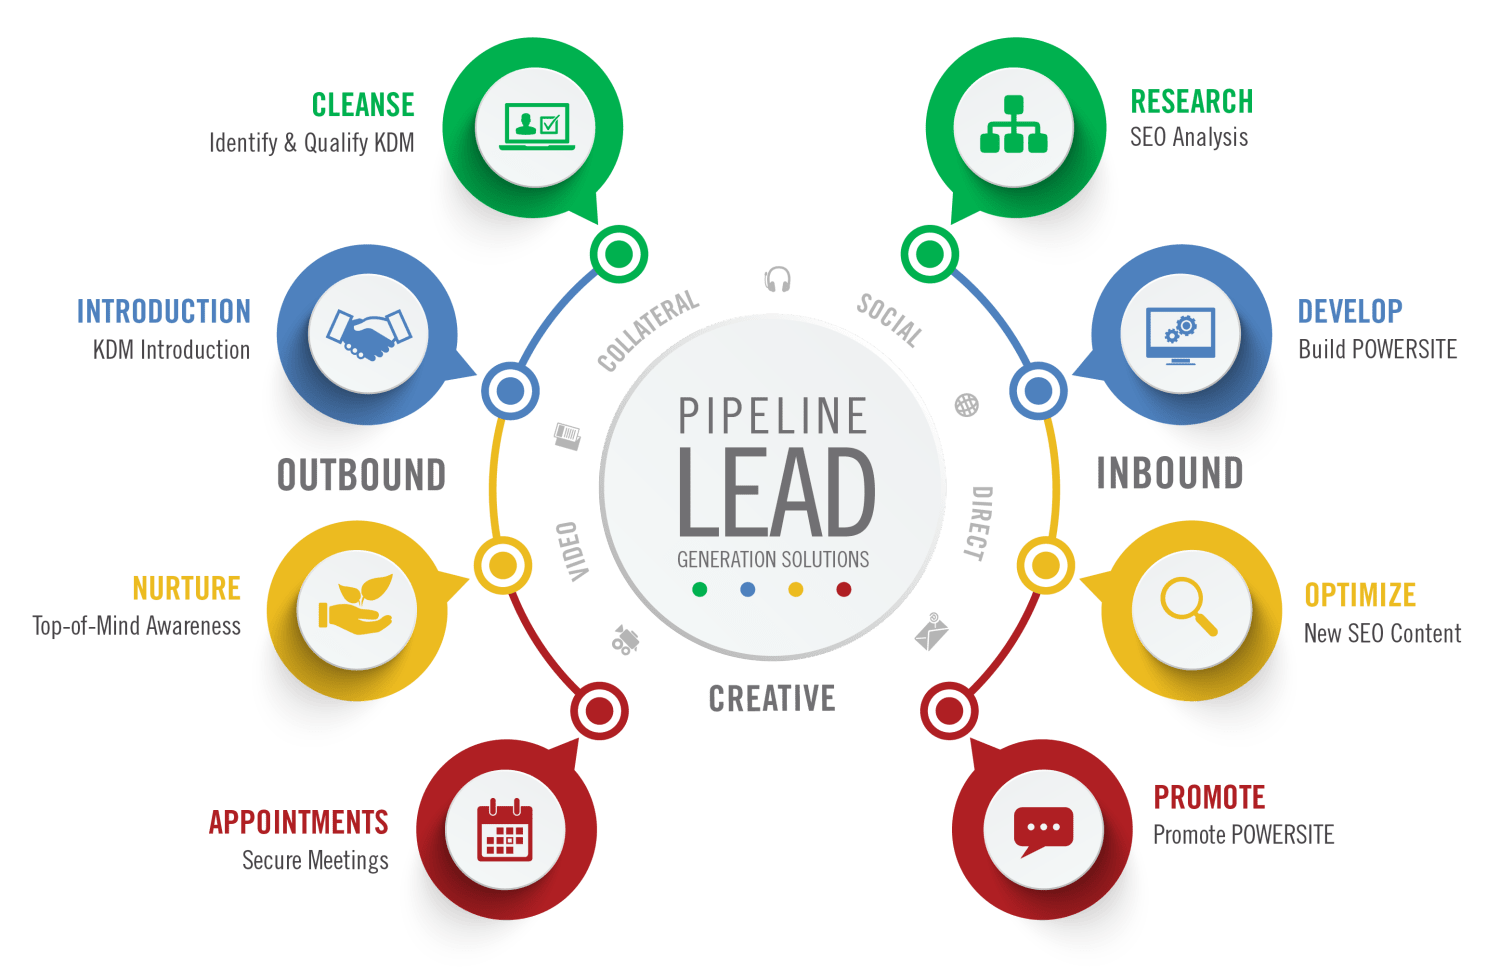 Six lead generation strategies that work - Lead generation